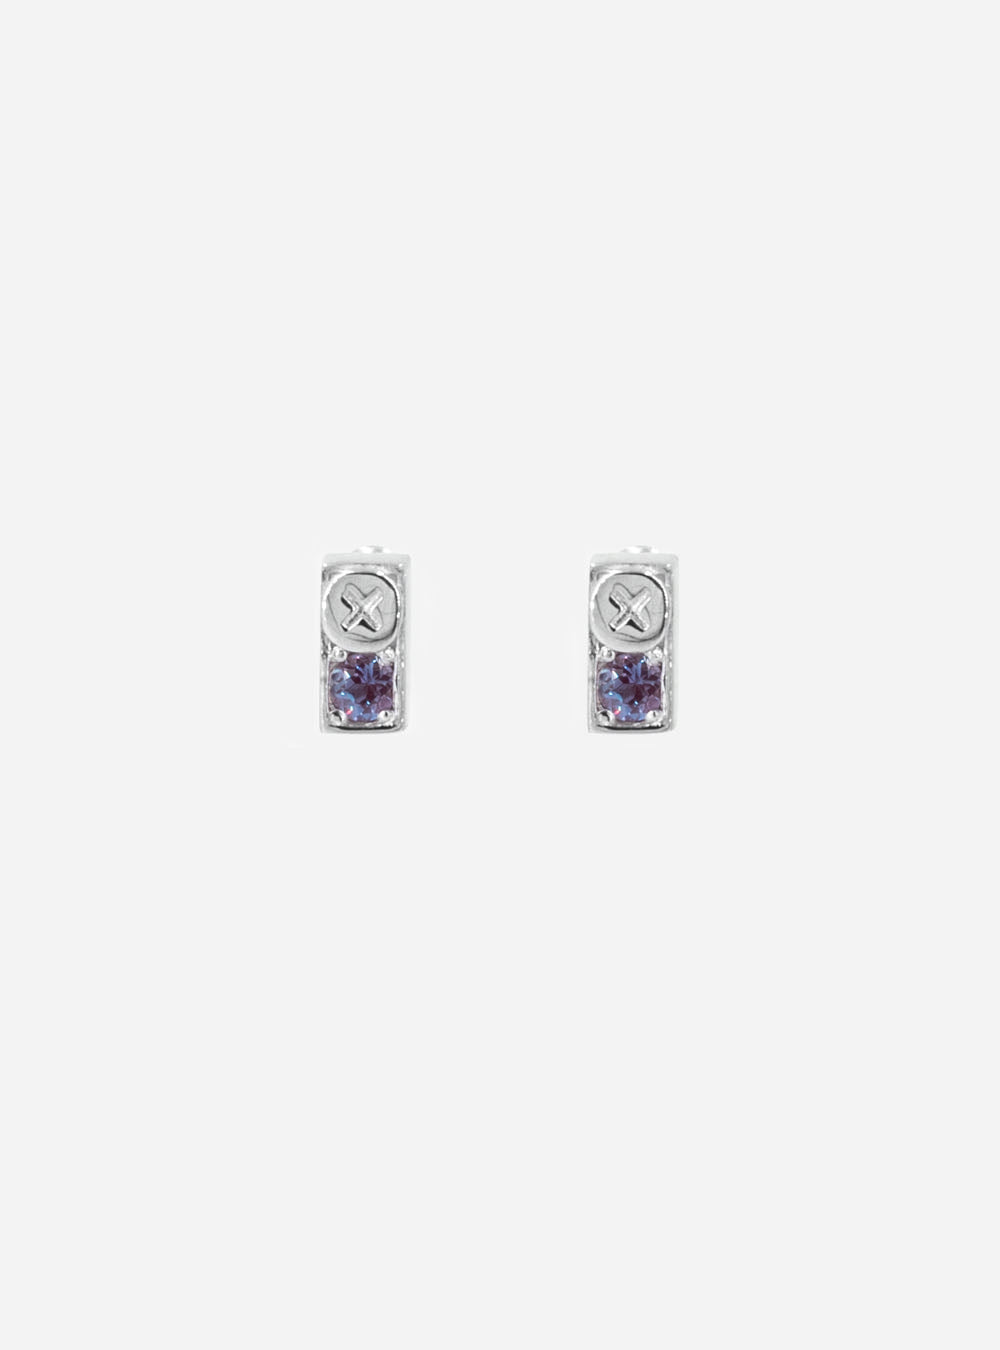 a pair of MIDNIGHTFACTORY Screwbox colour-changing alexandrite earrings.